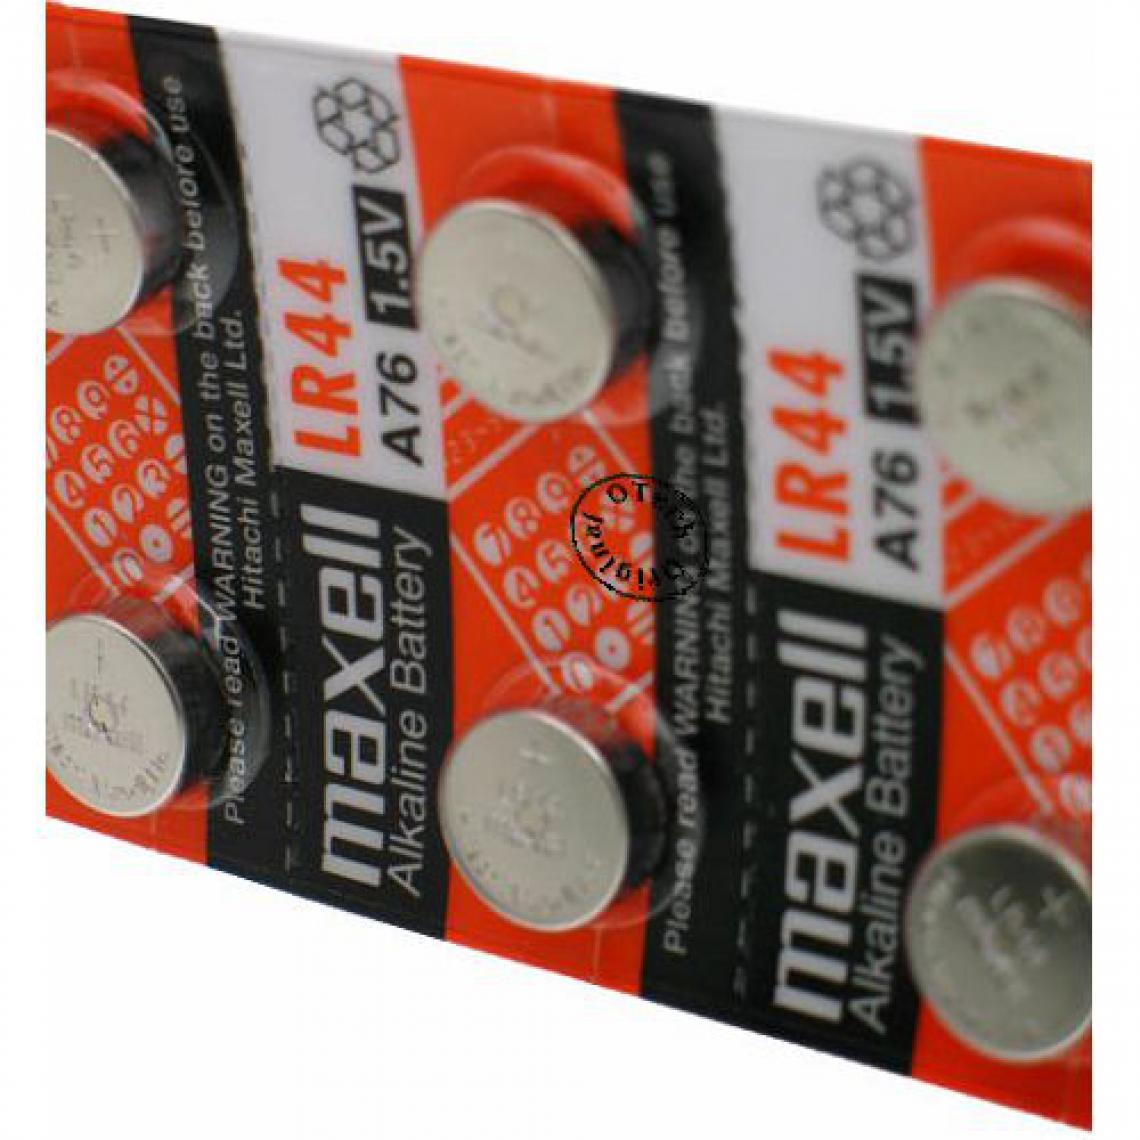 Otech - Pack de 10 piles maxell pour MAXELL G13-A - Piles rechargeables